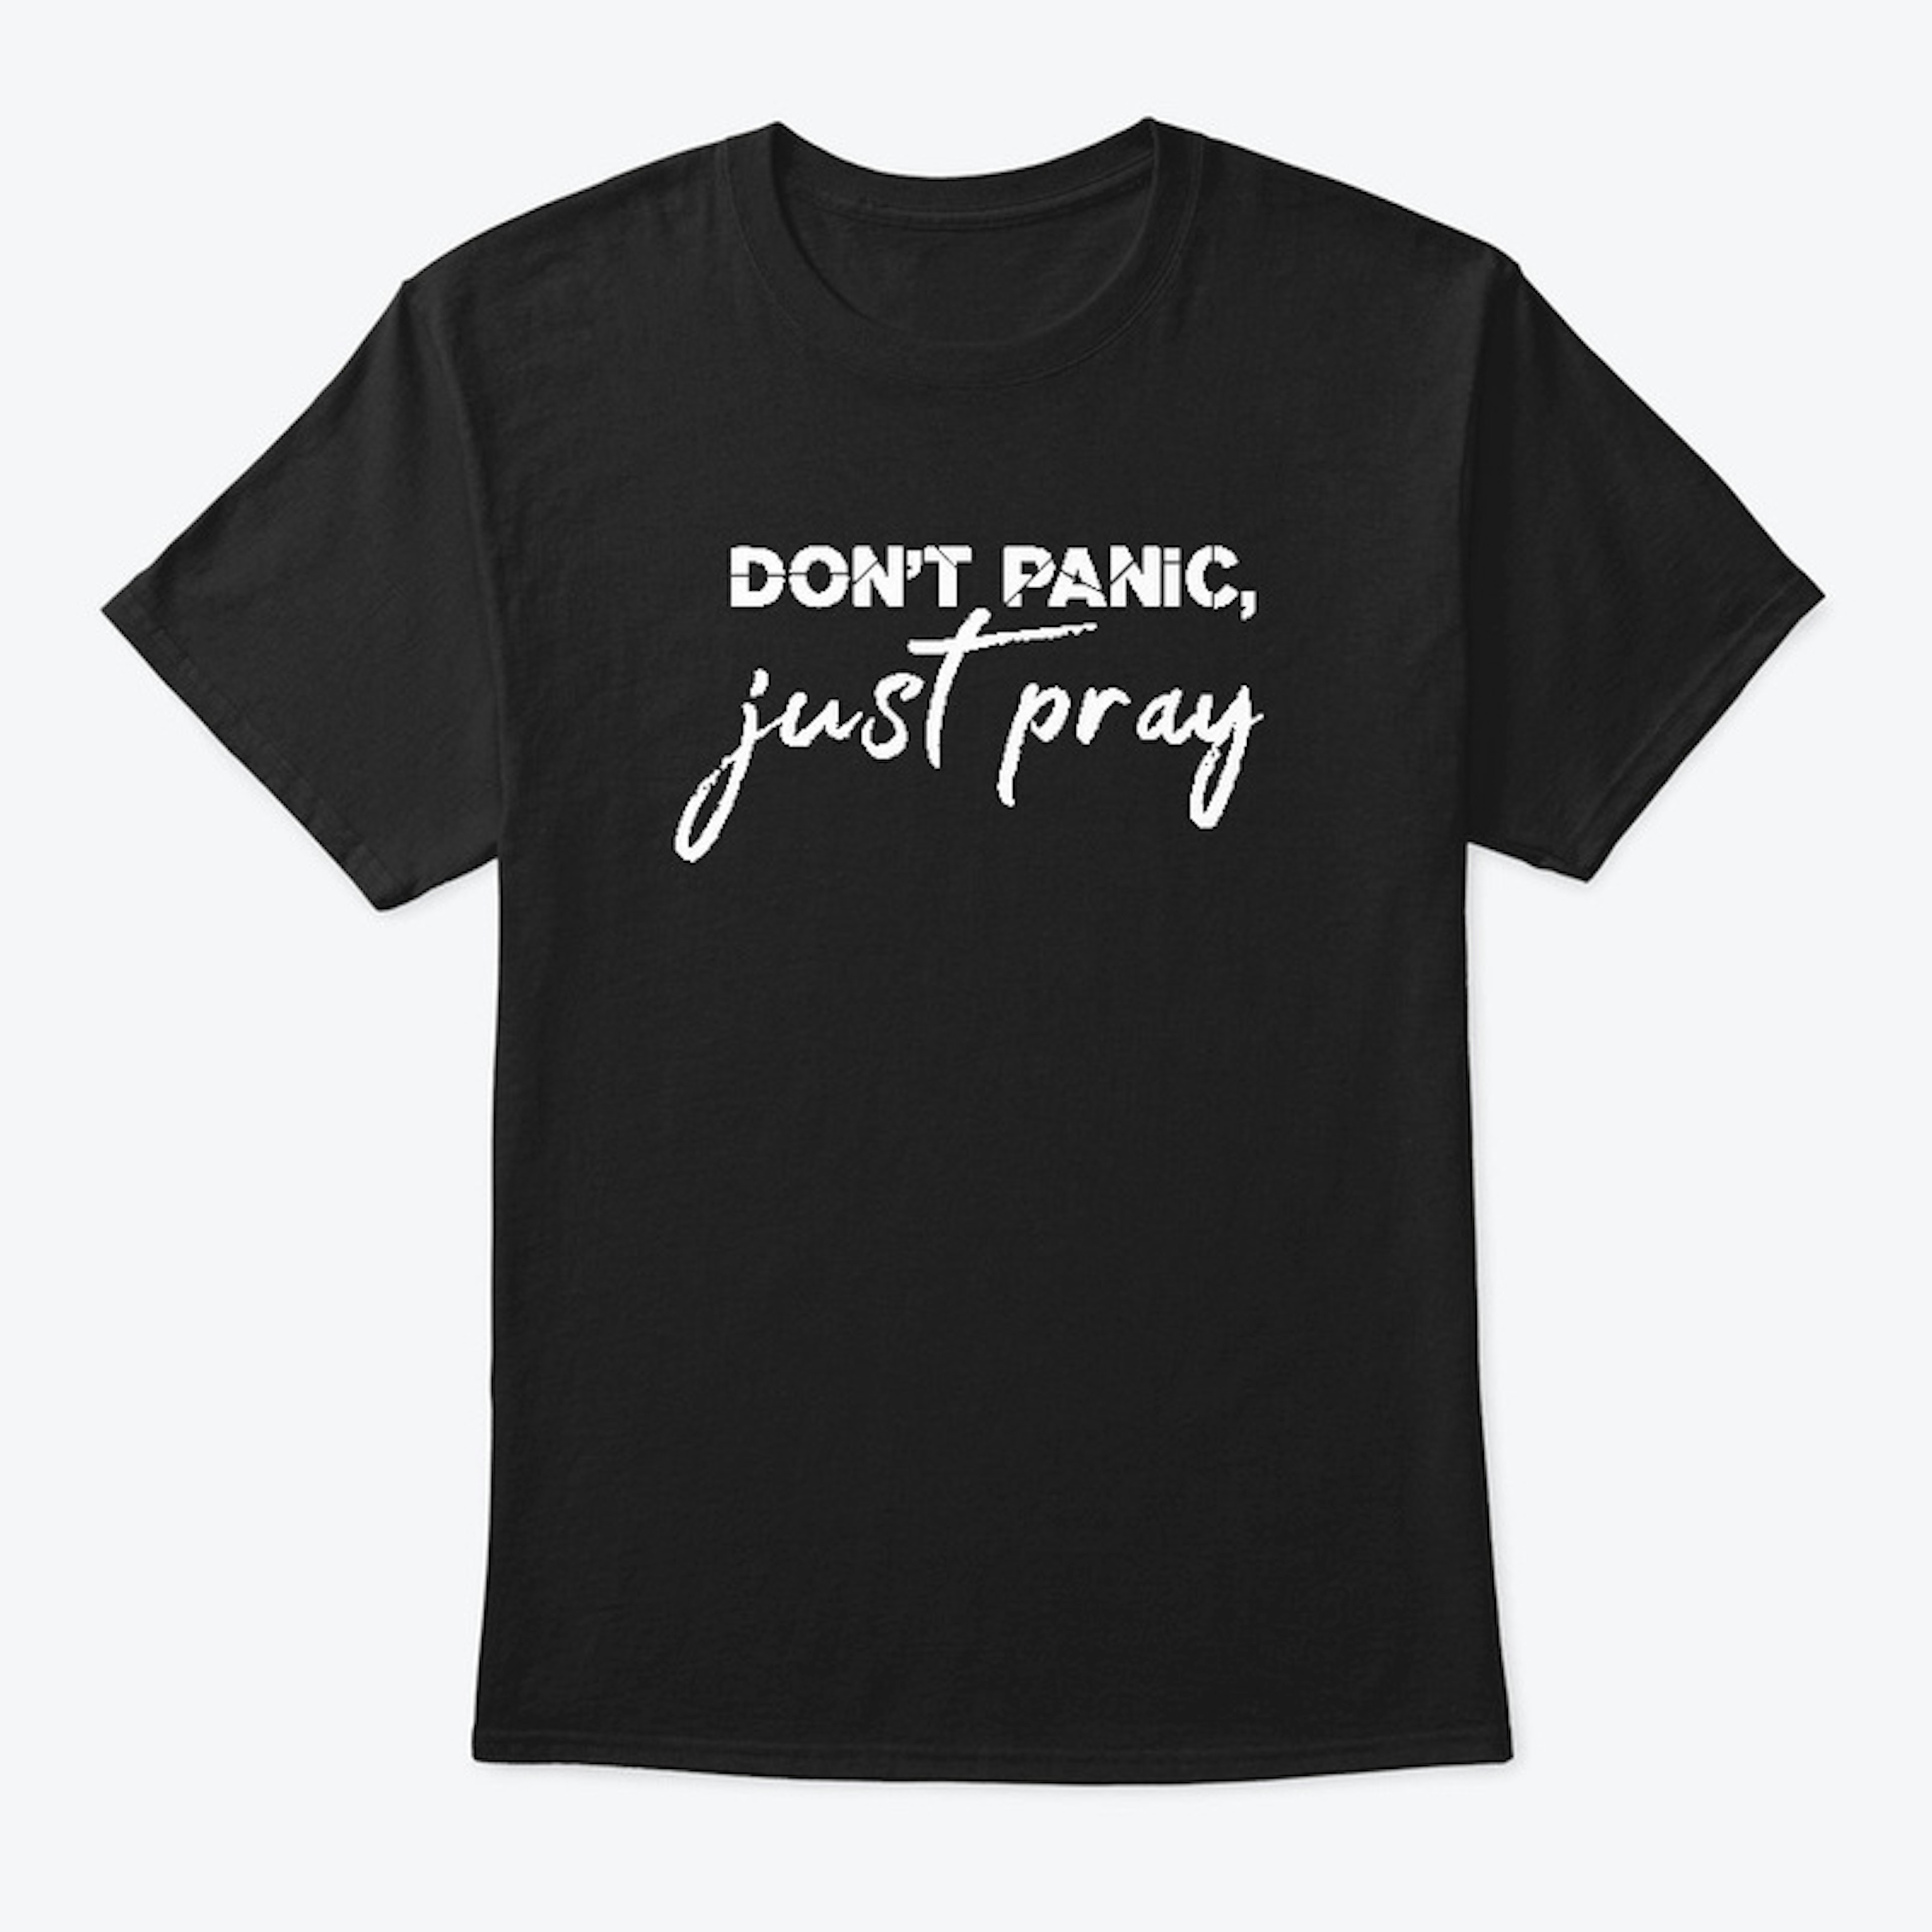 Team jesus t-shirts Dont panic just pray